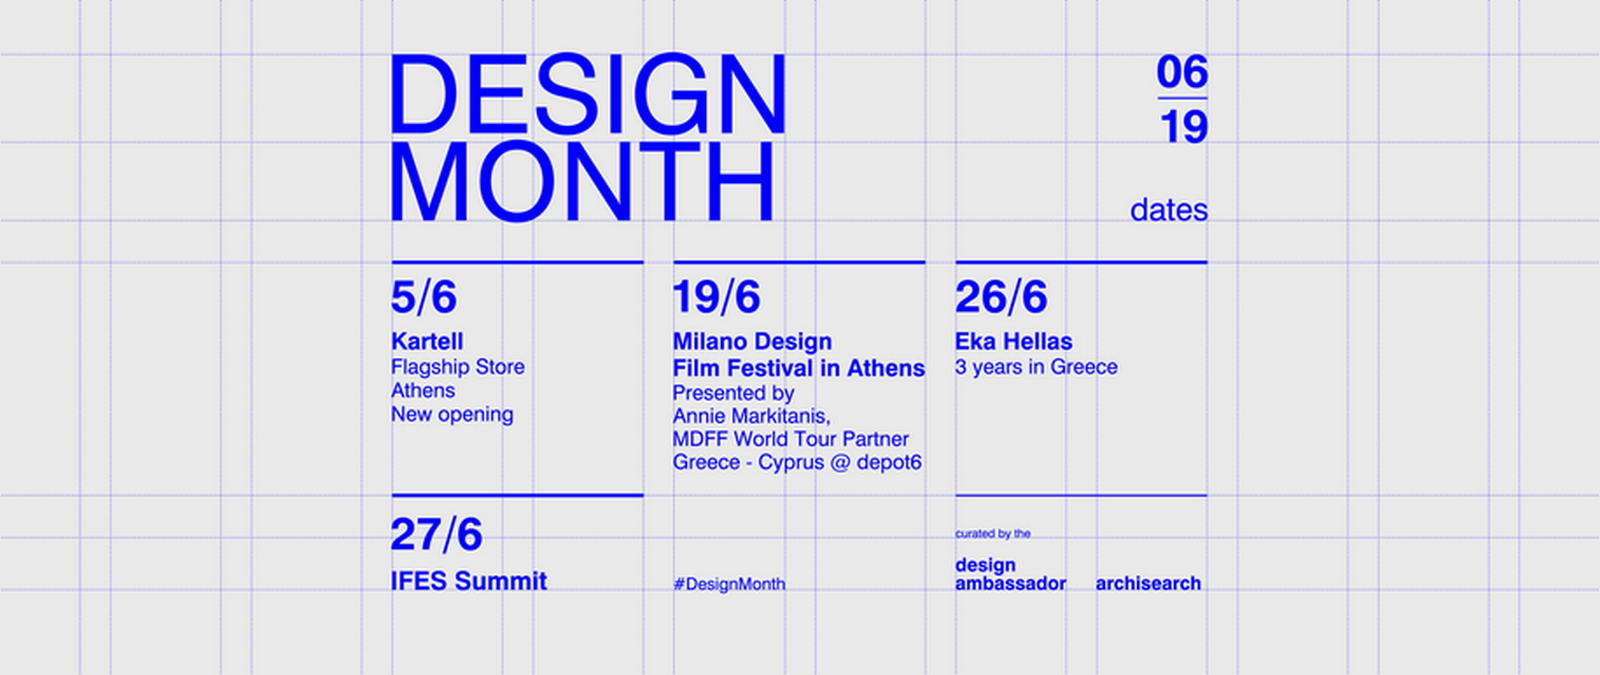 Archisearch Design Month: όλα όσα έγιναν τον Ιούνιο του 2019 στην design Αθήνα